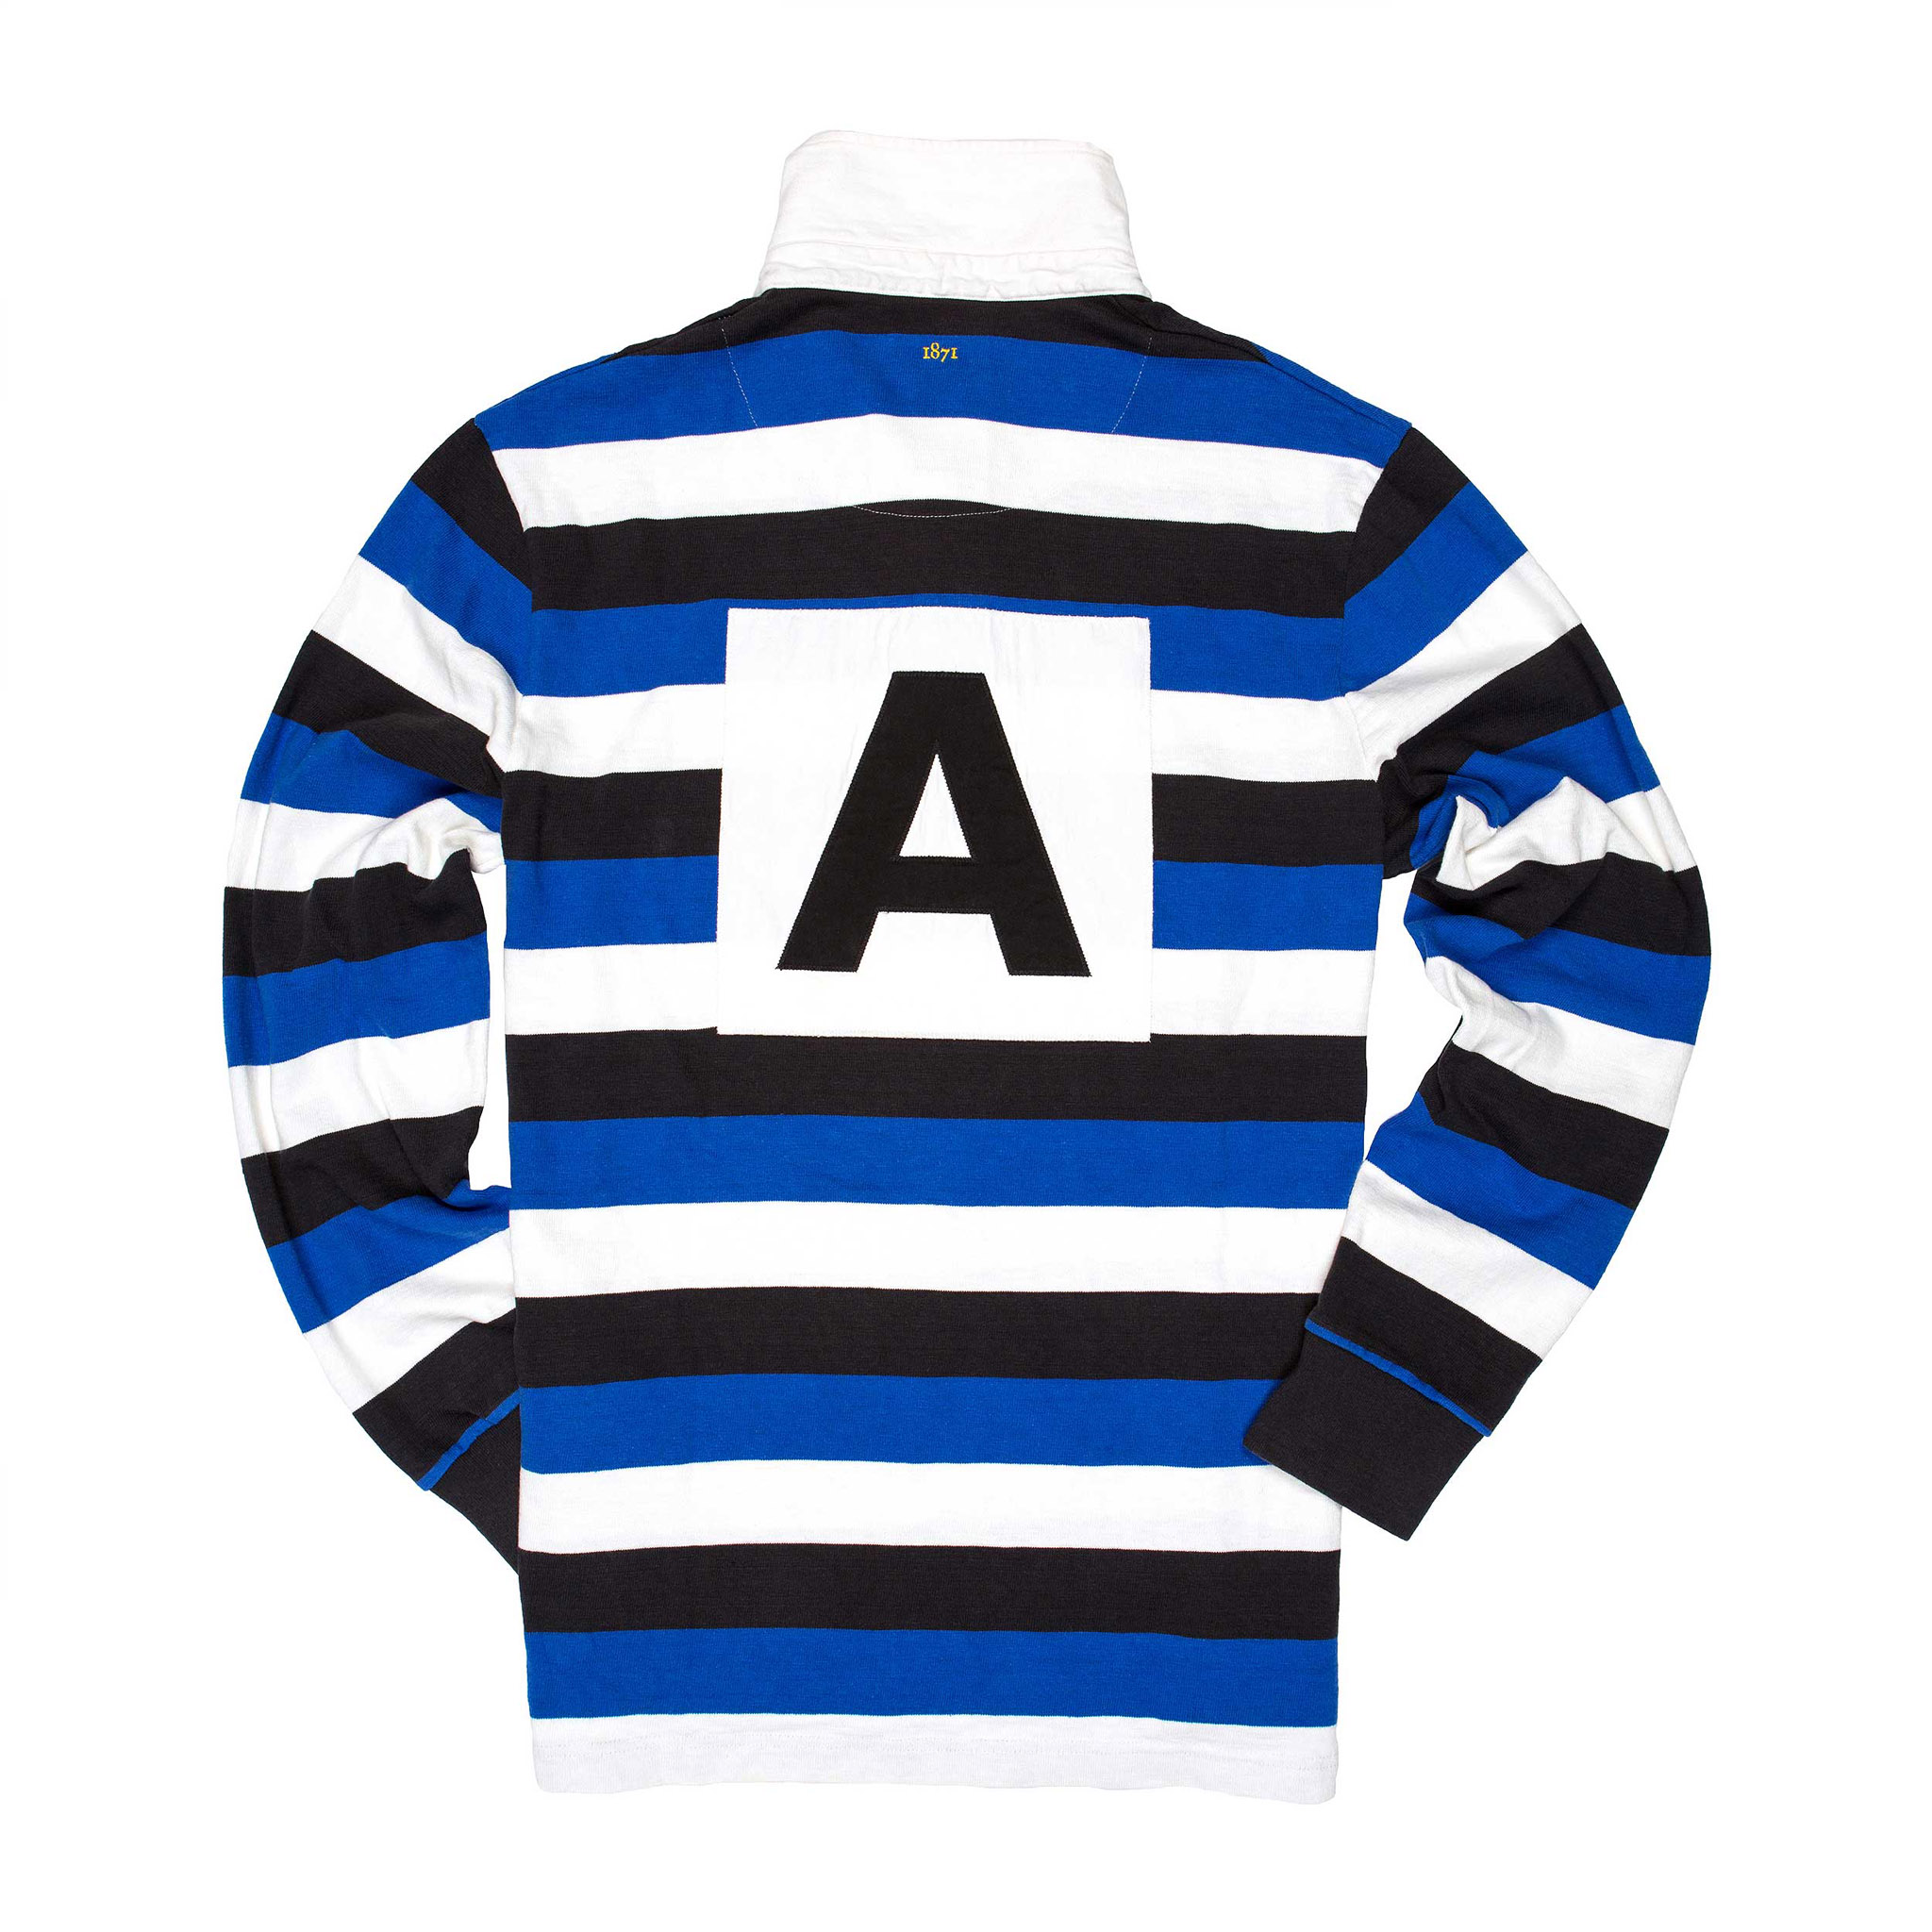 Addison 1871 Rugby Shirt - back